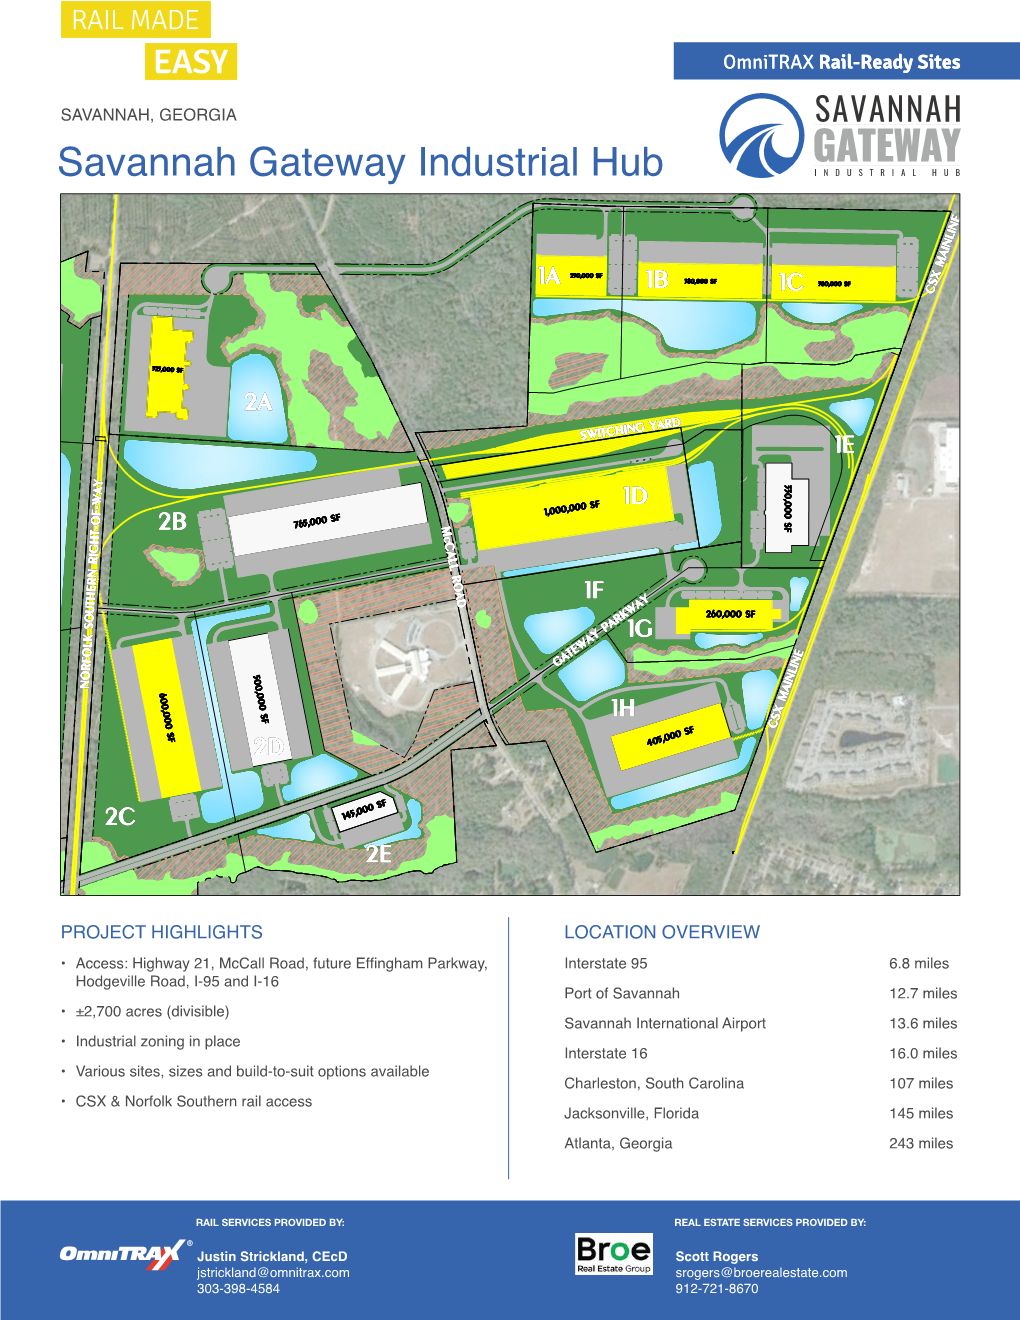 Savannah Gateway Industrial